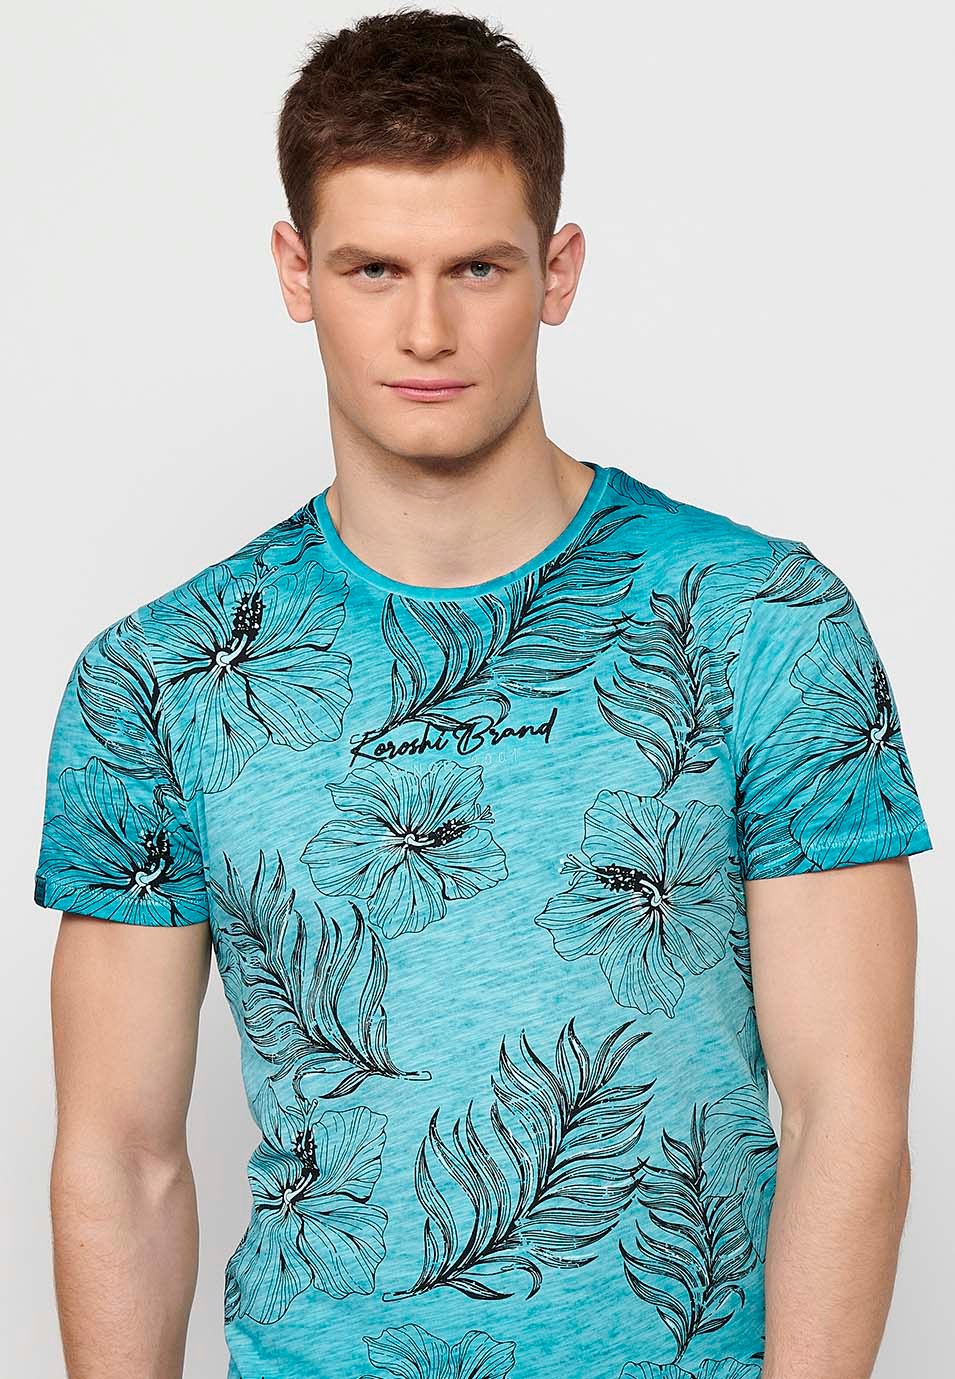 Short-sleeved cotton t-shirt, mint floral print for men